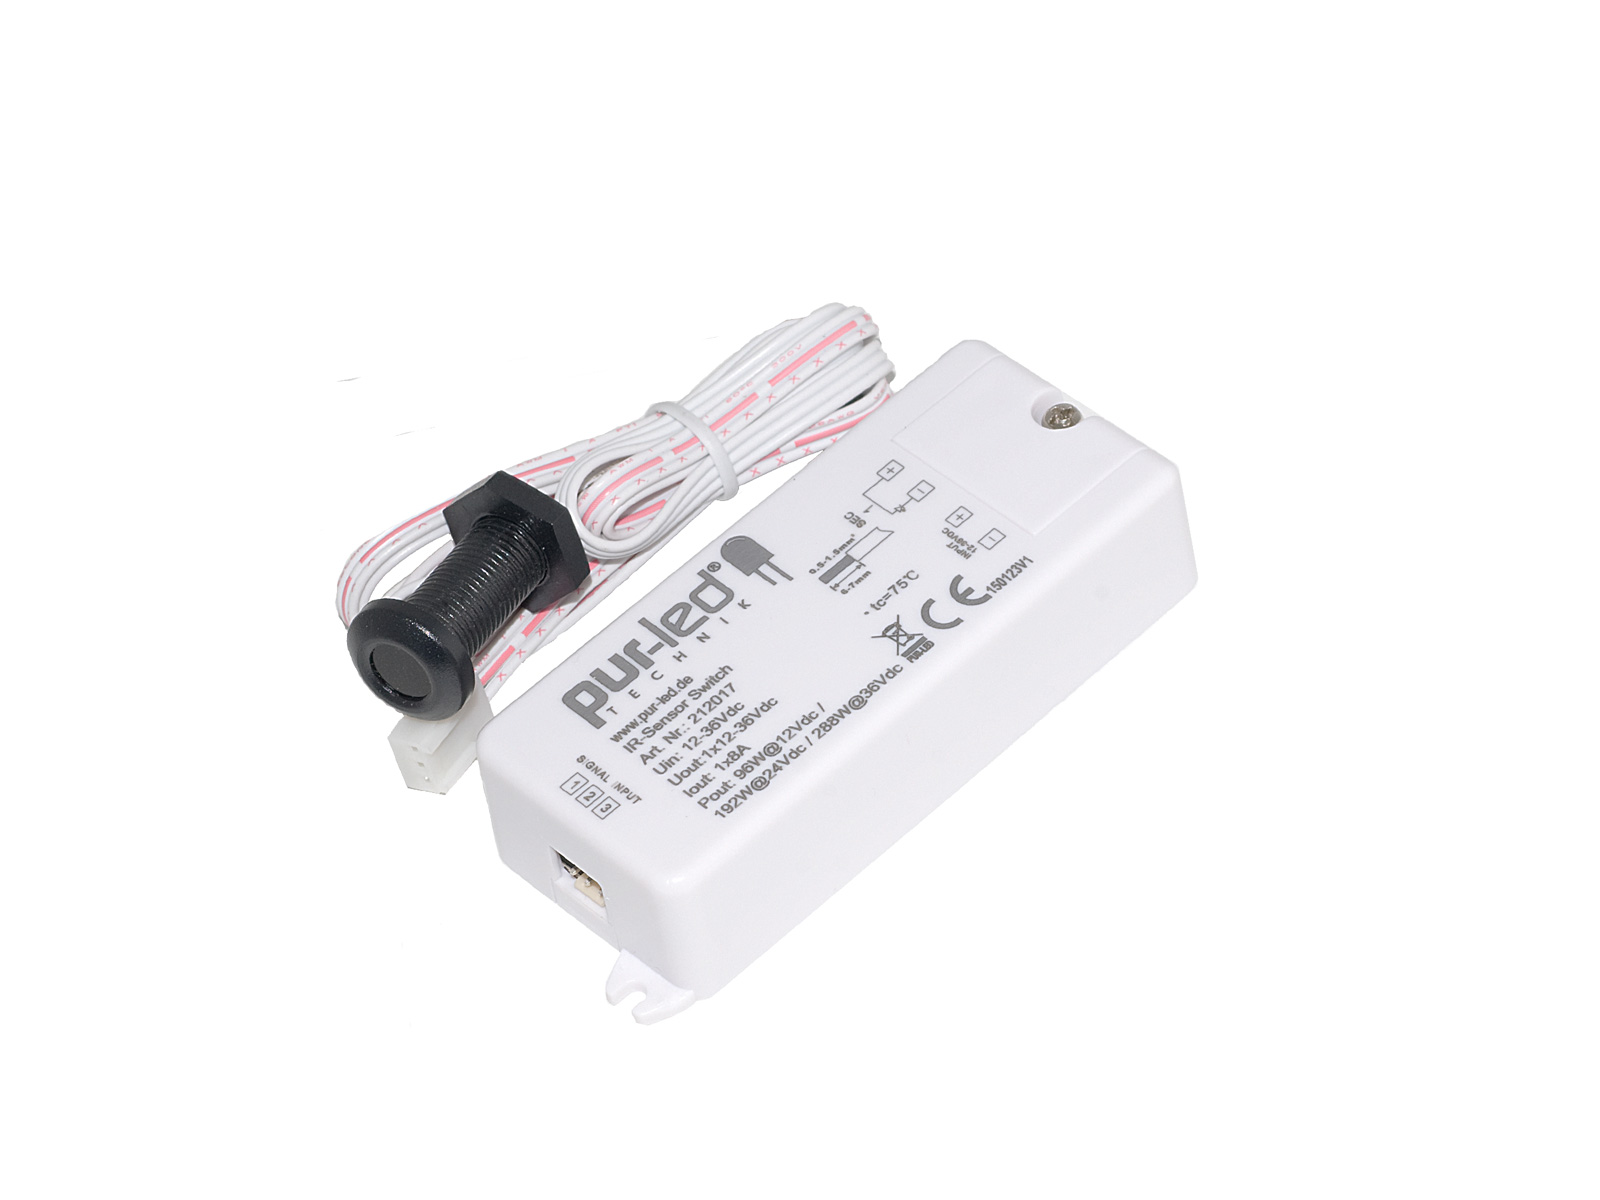 Lichtschranke / berührungsloser Schalter inkl. Sensor 12-36Vdc 8A kaufen